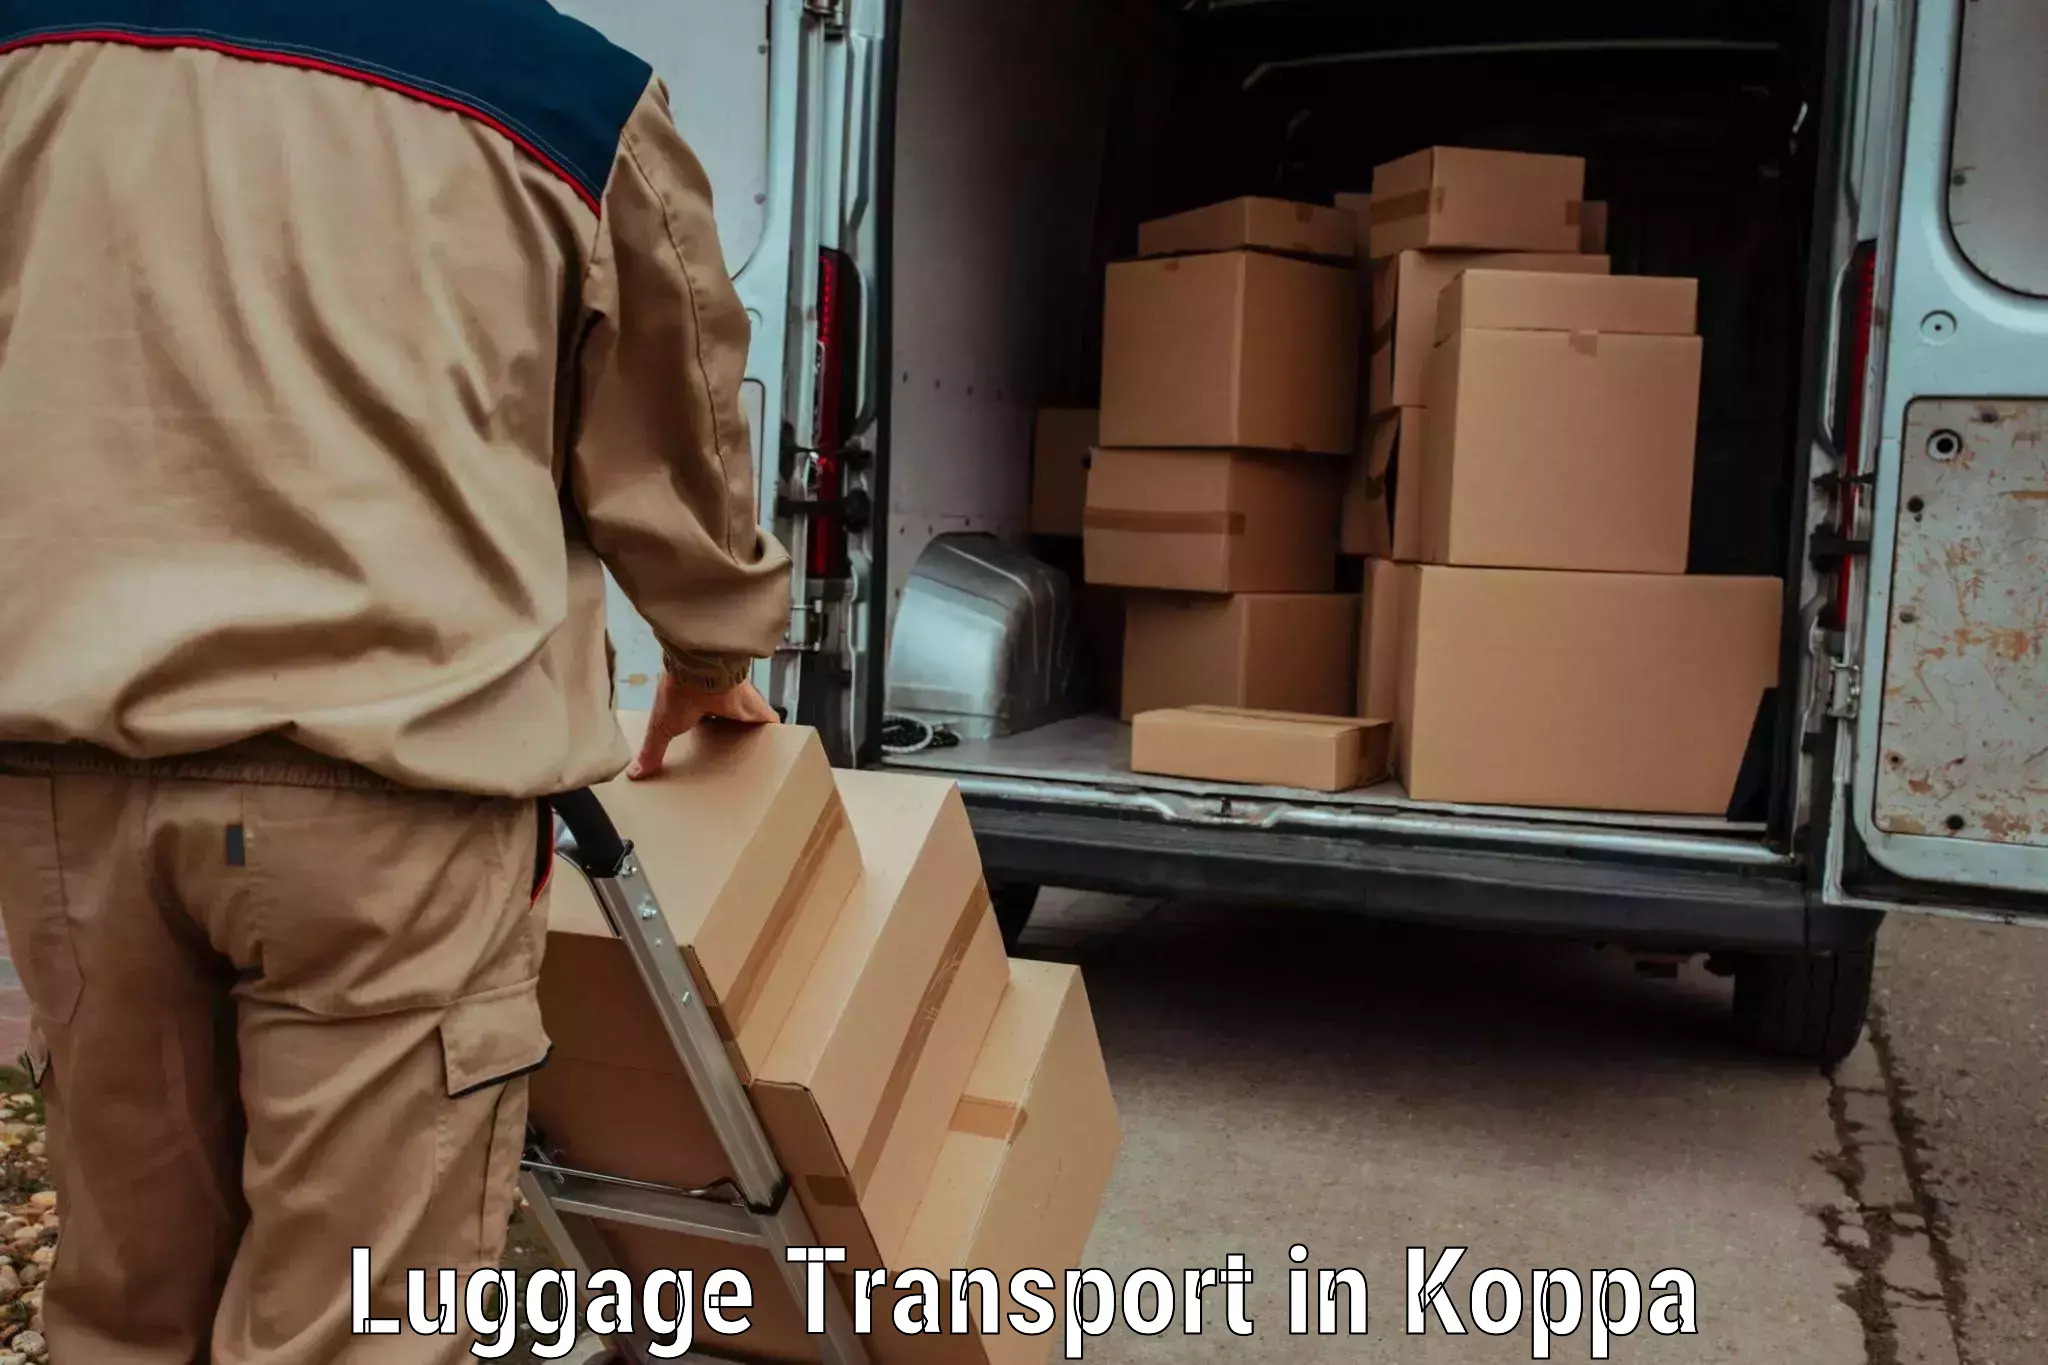 Heavy luggage shipping in Koppa